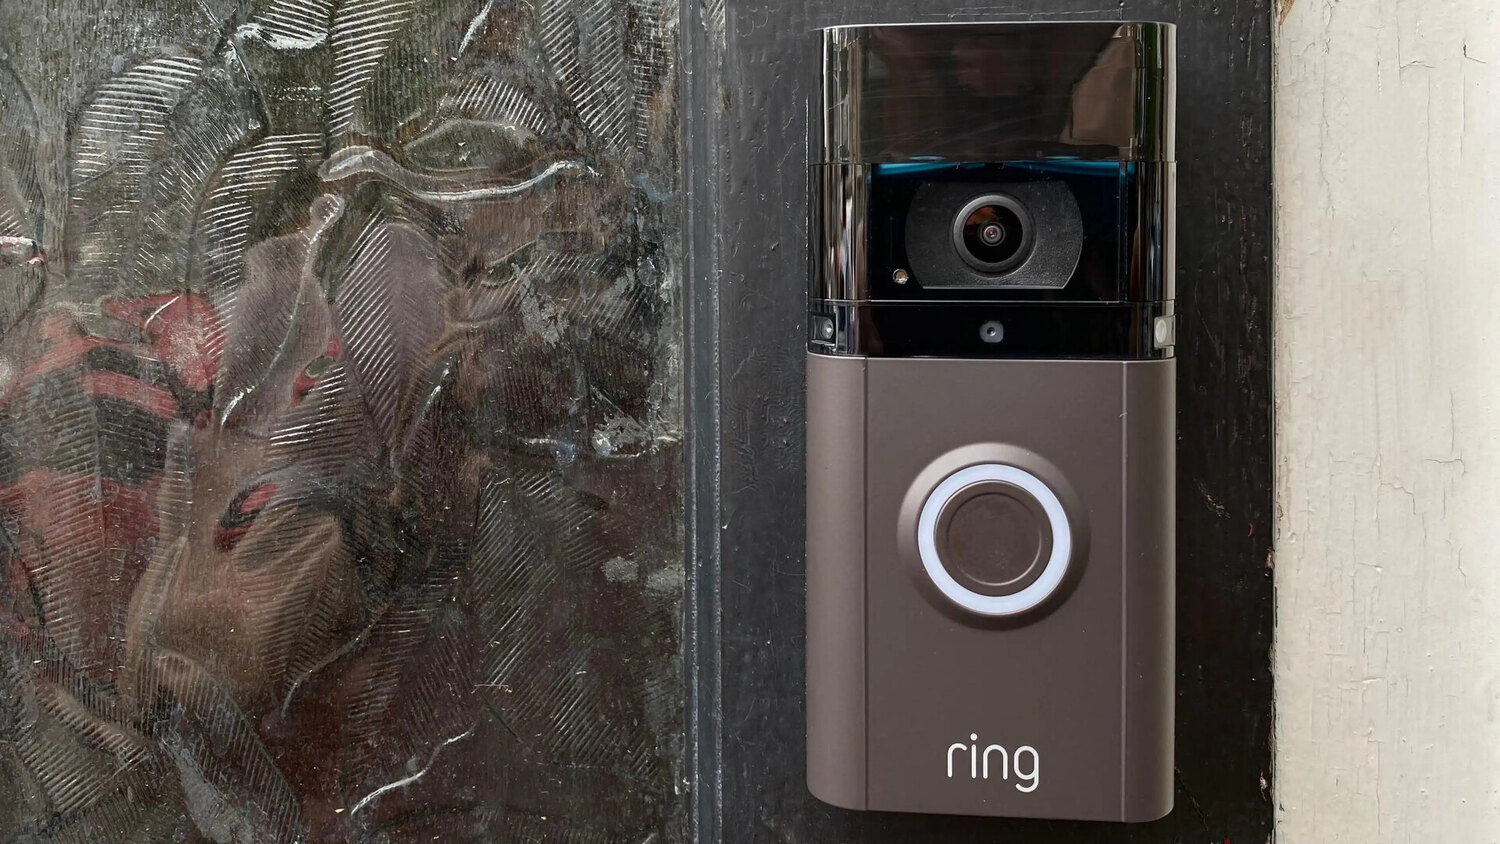 How To Open The Ring Doorbell